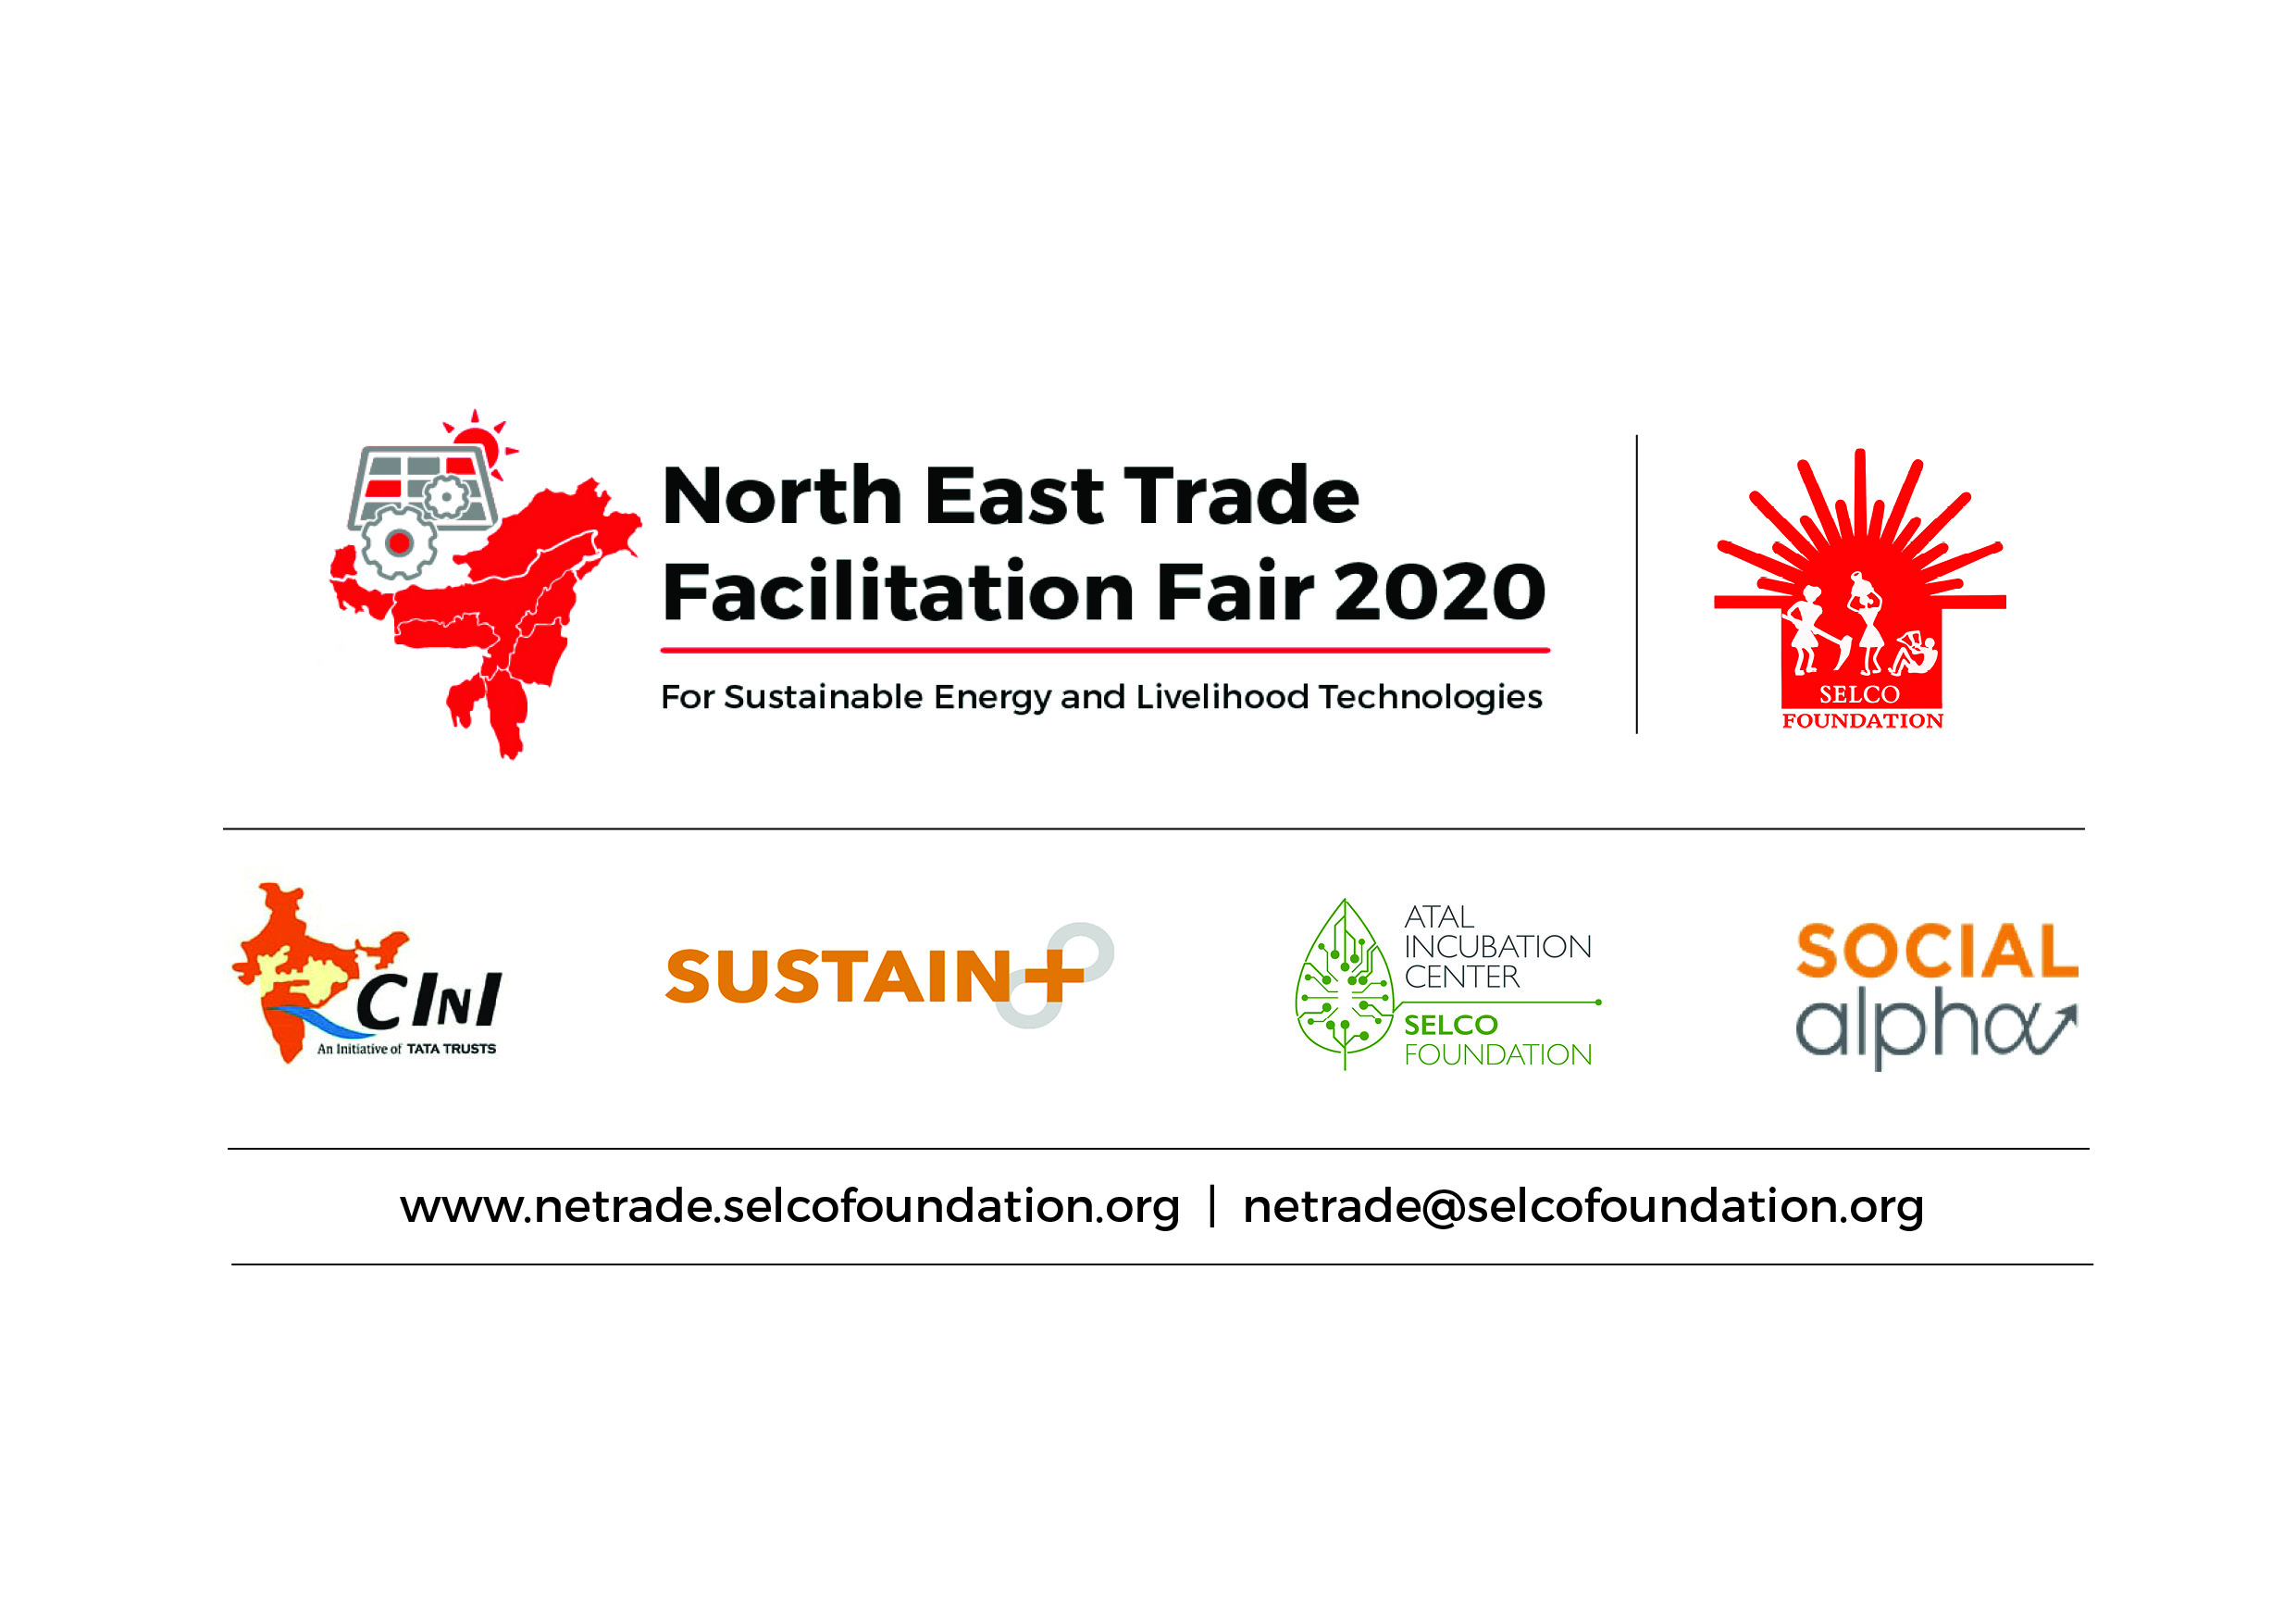 North East Trade Facilitation Fair 2020, Guwahati, Assam, India